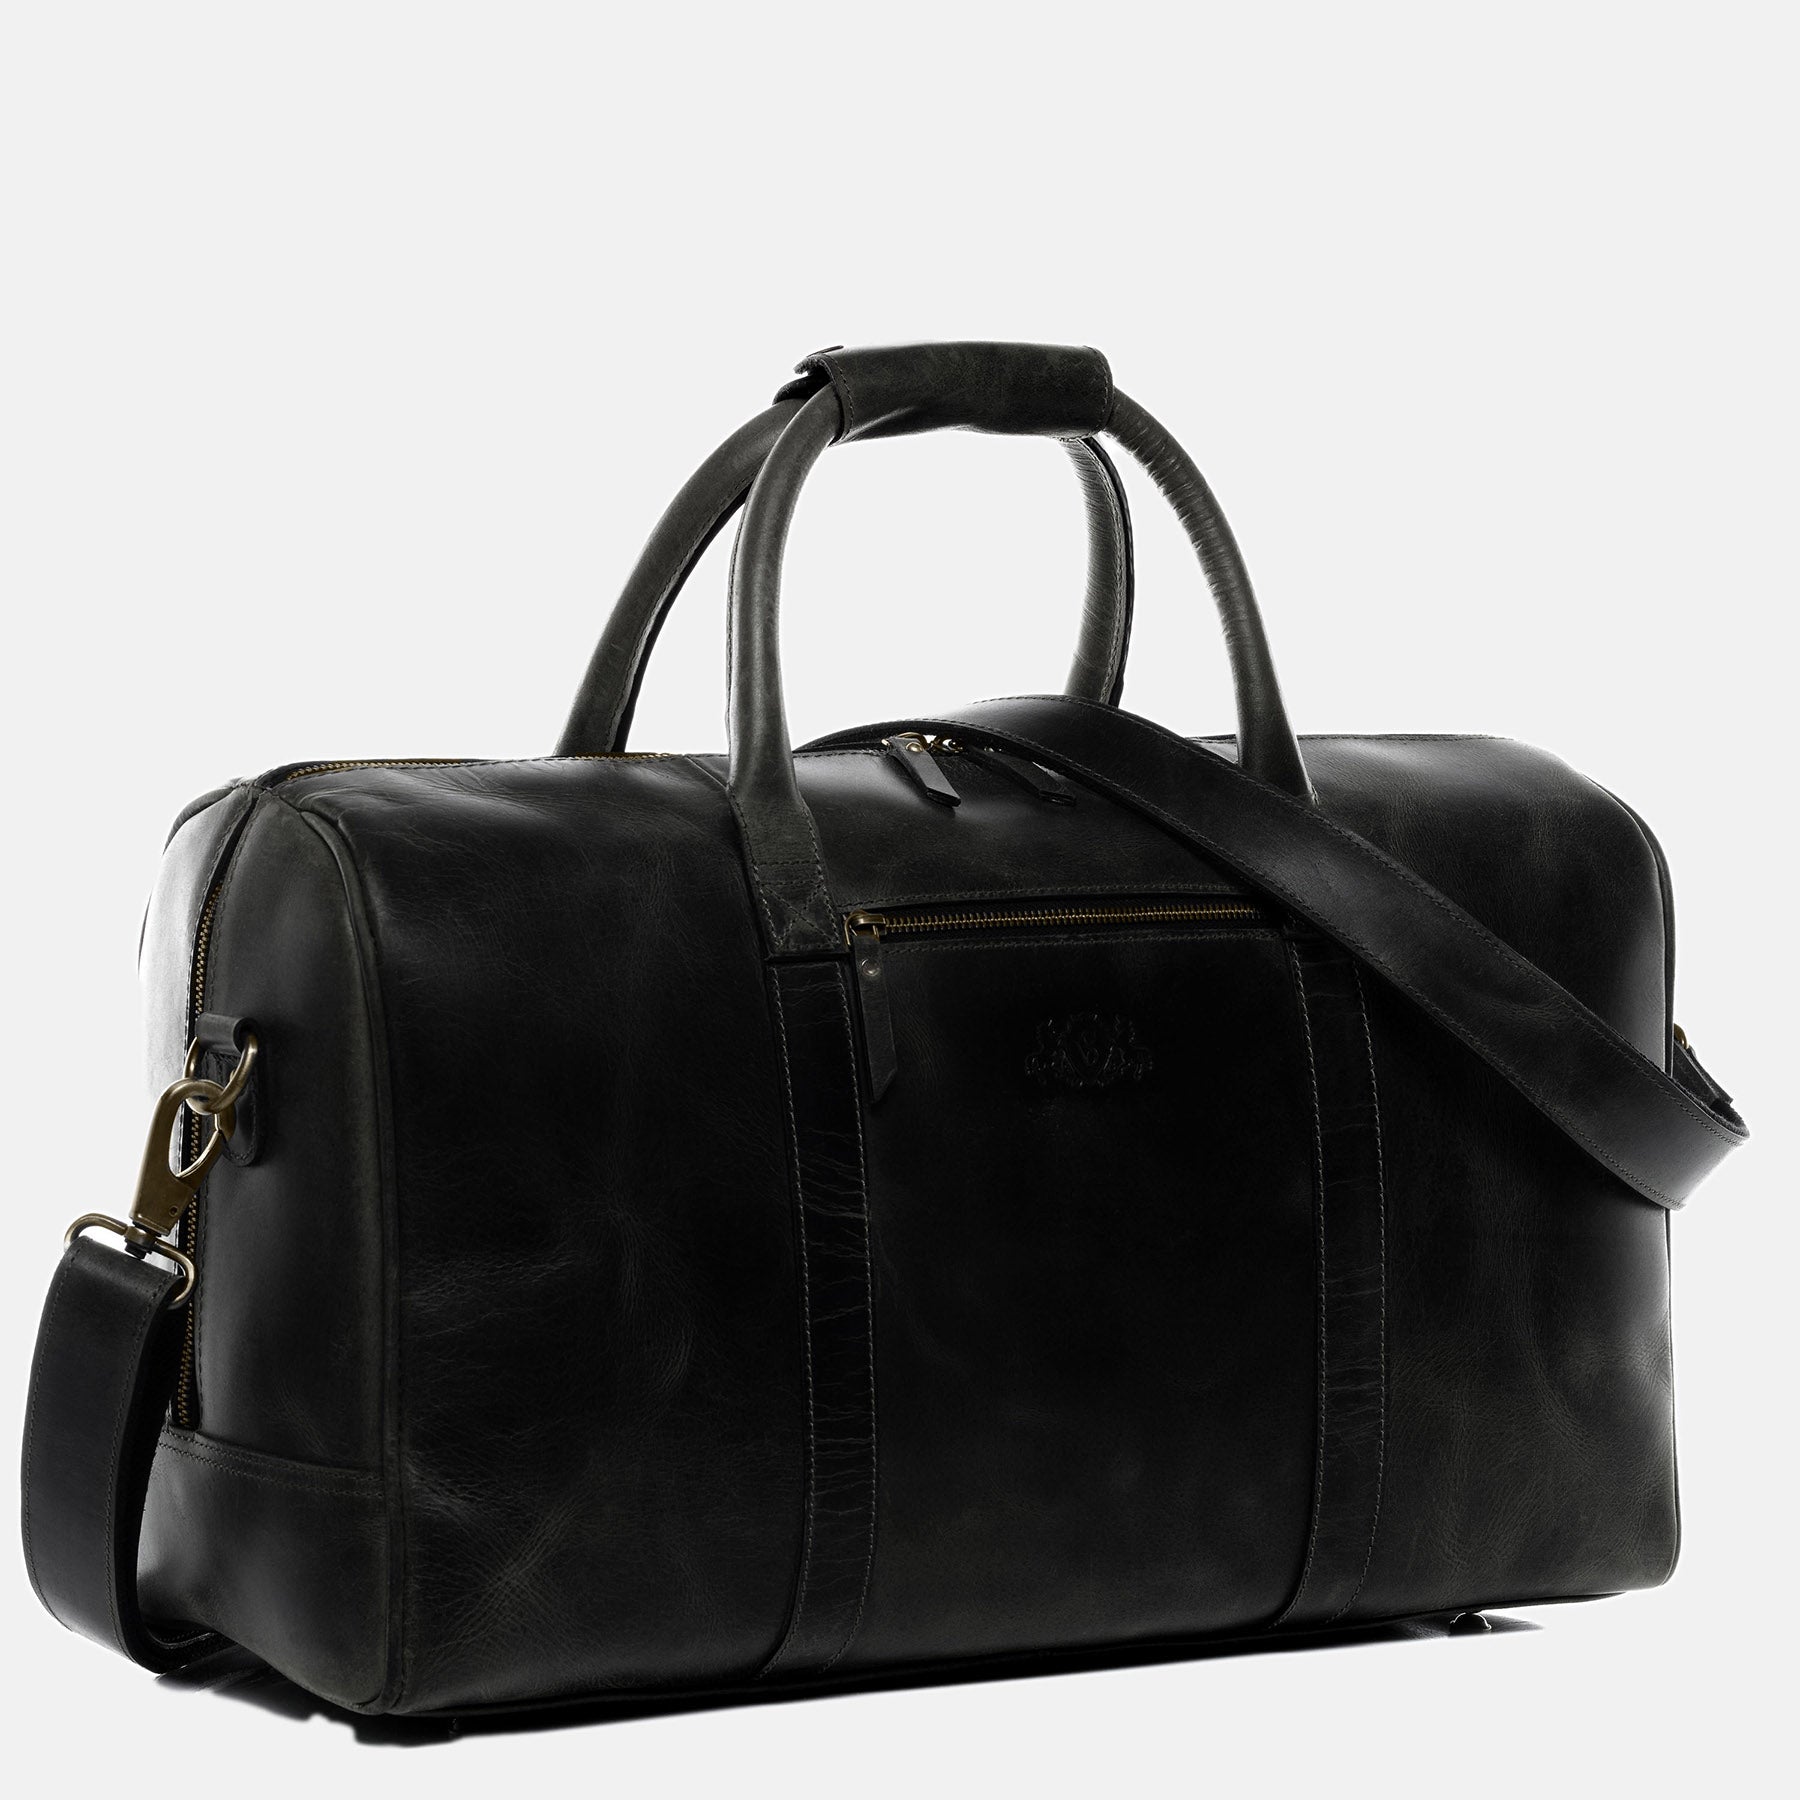 Travel bag CHAD buffalo leather vintage black